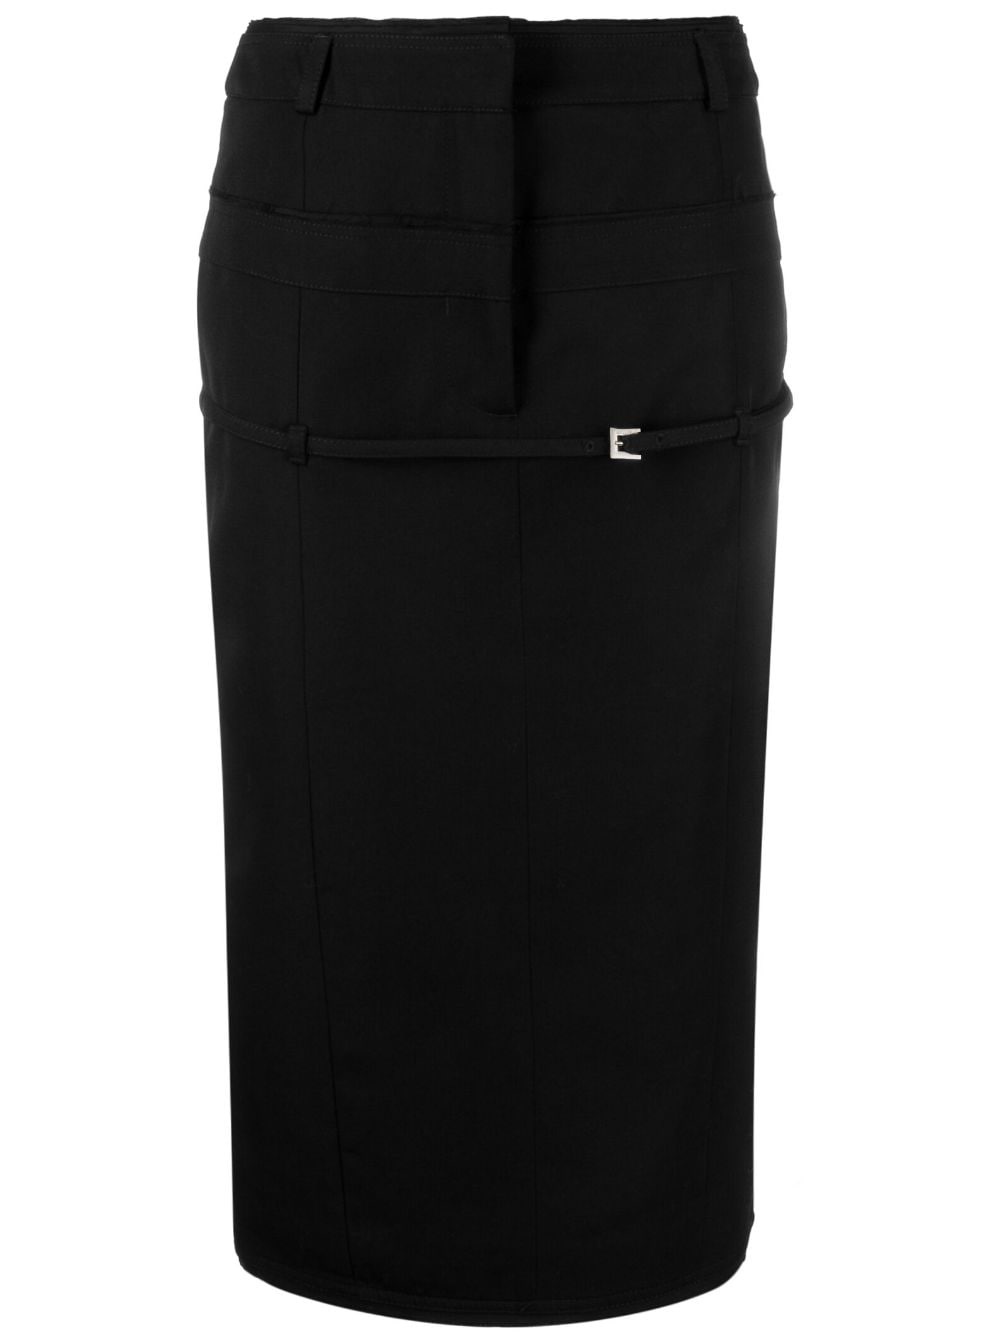 La Jupe Caraco pencil skirt - 1